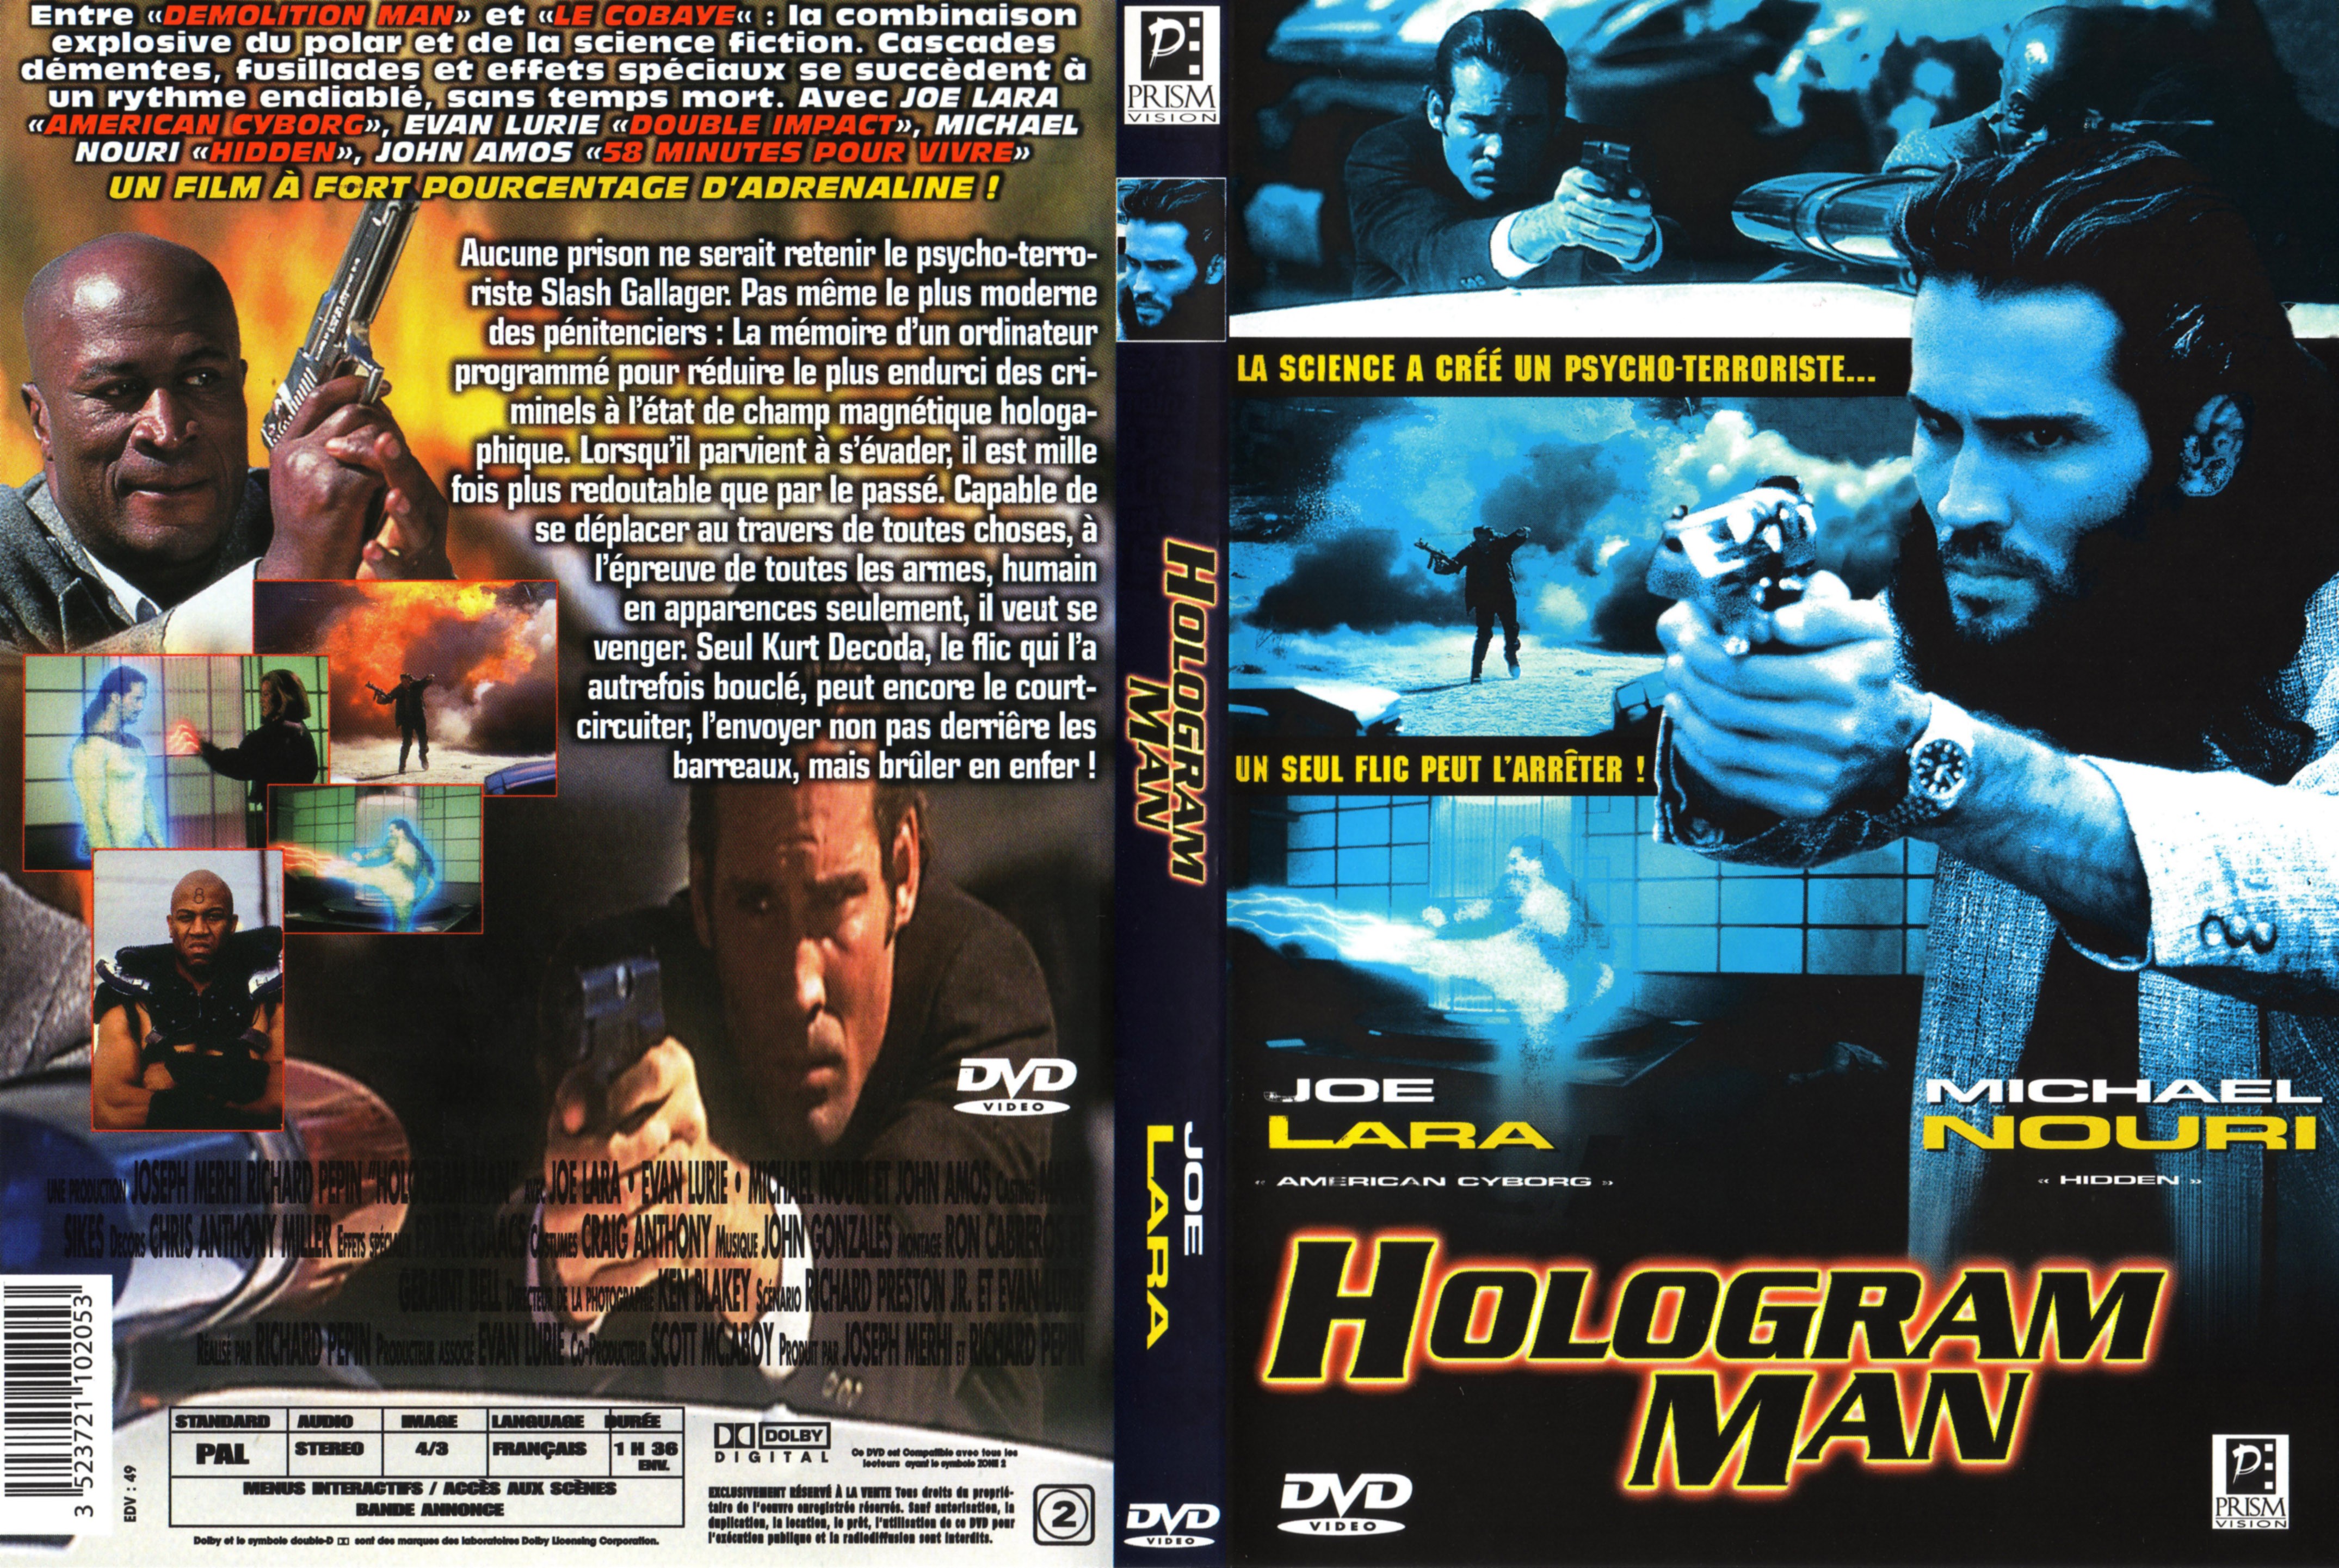 Jaquette DVD Hologram man